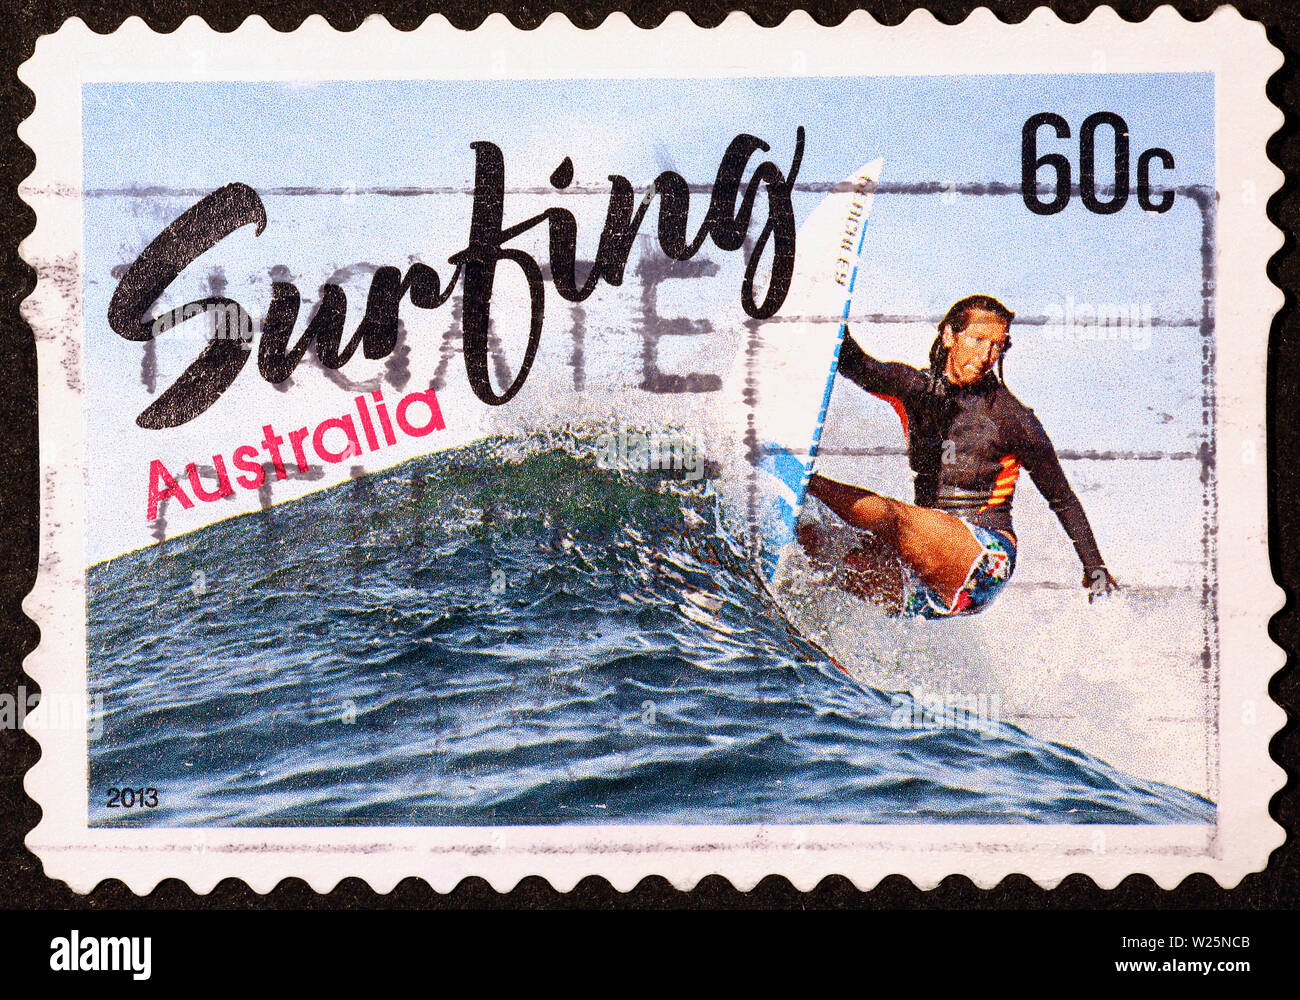 Woman surfing on australian postage stamp Stock Photo